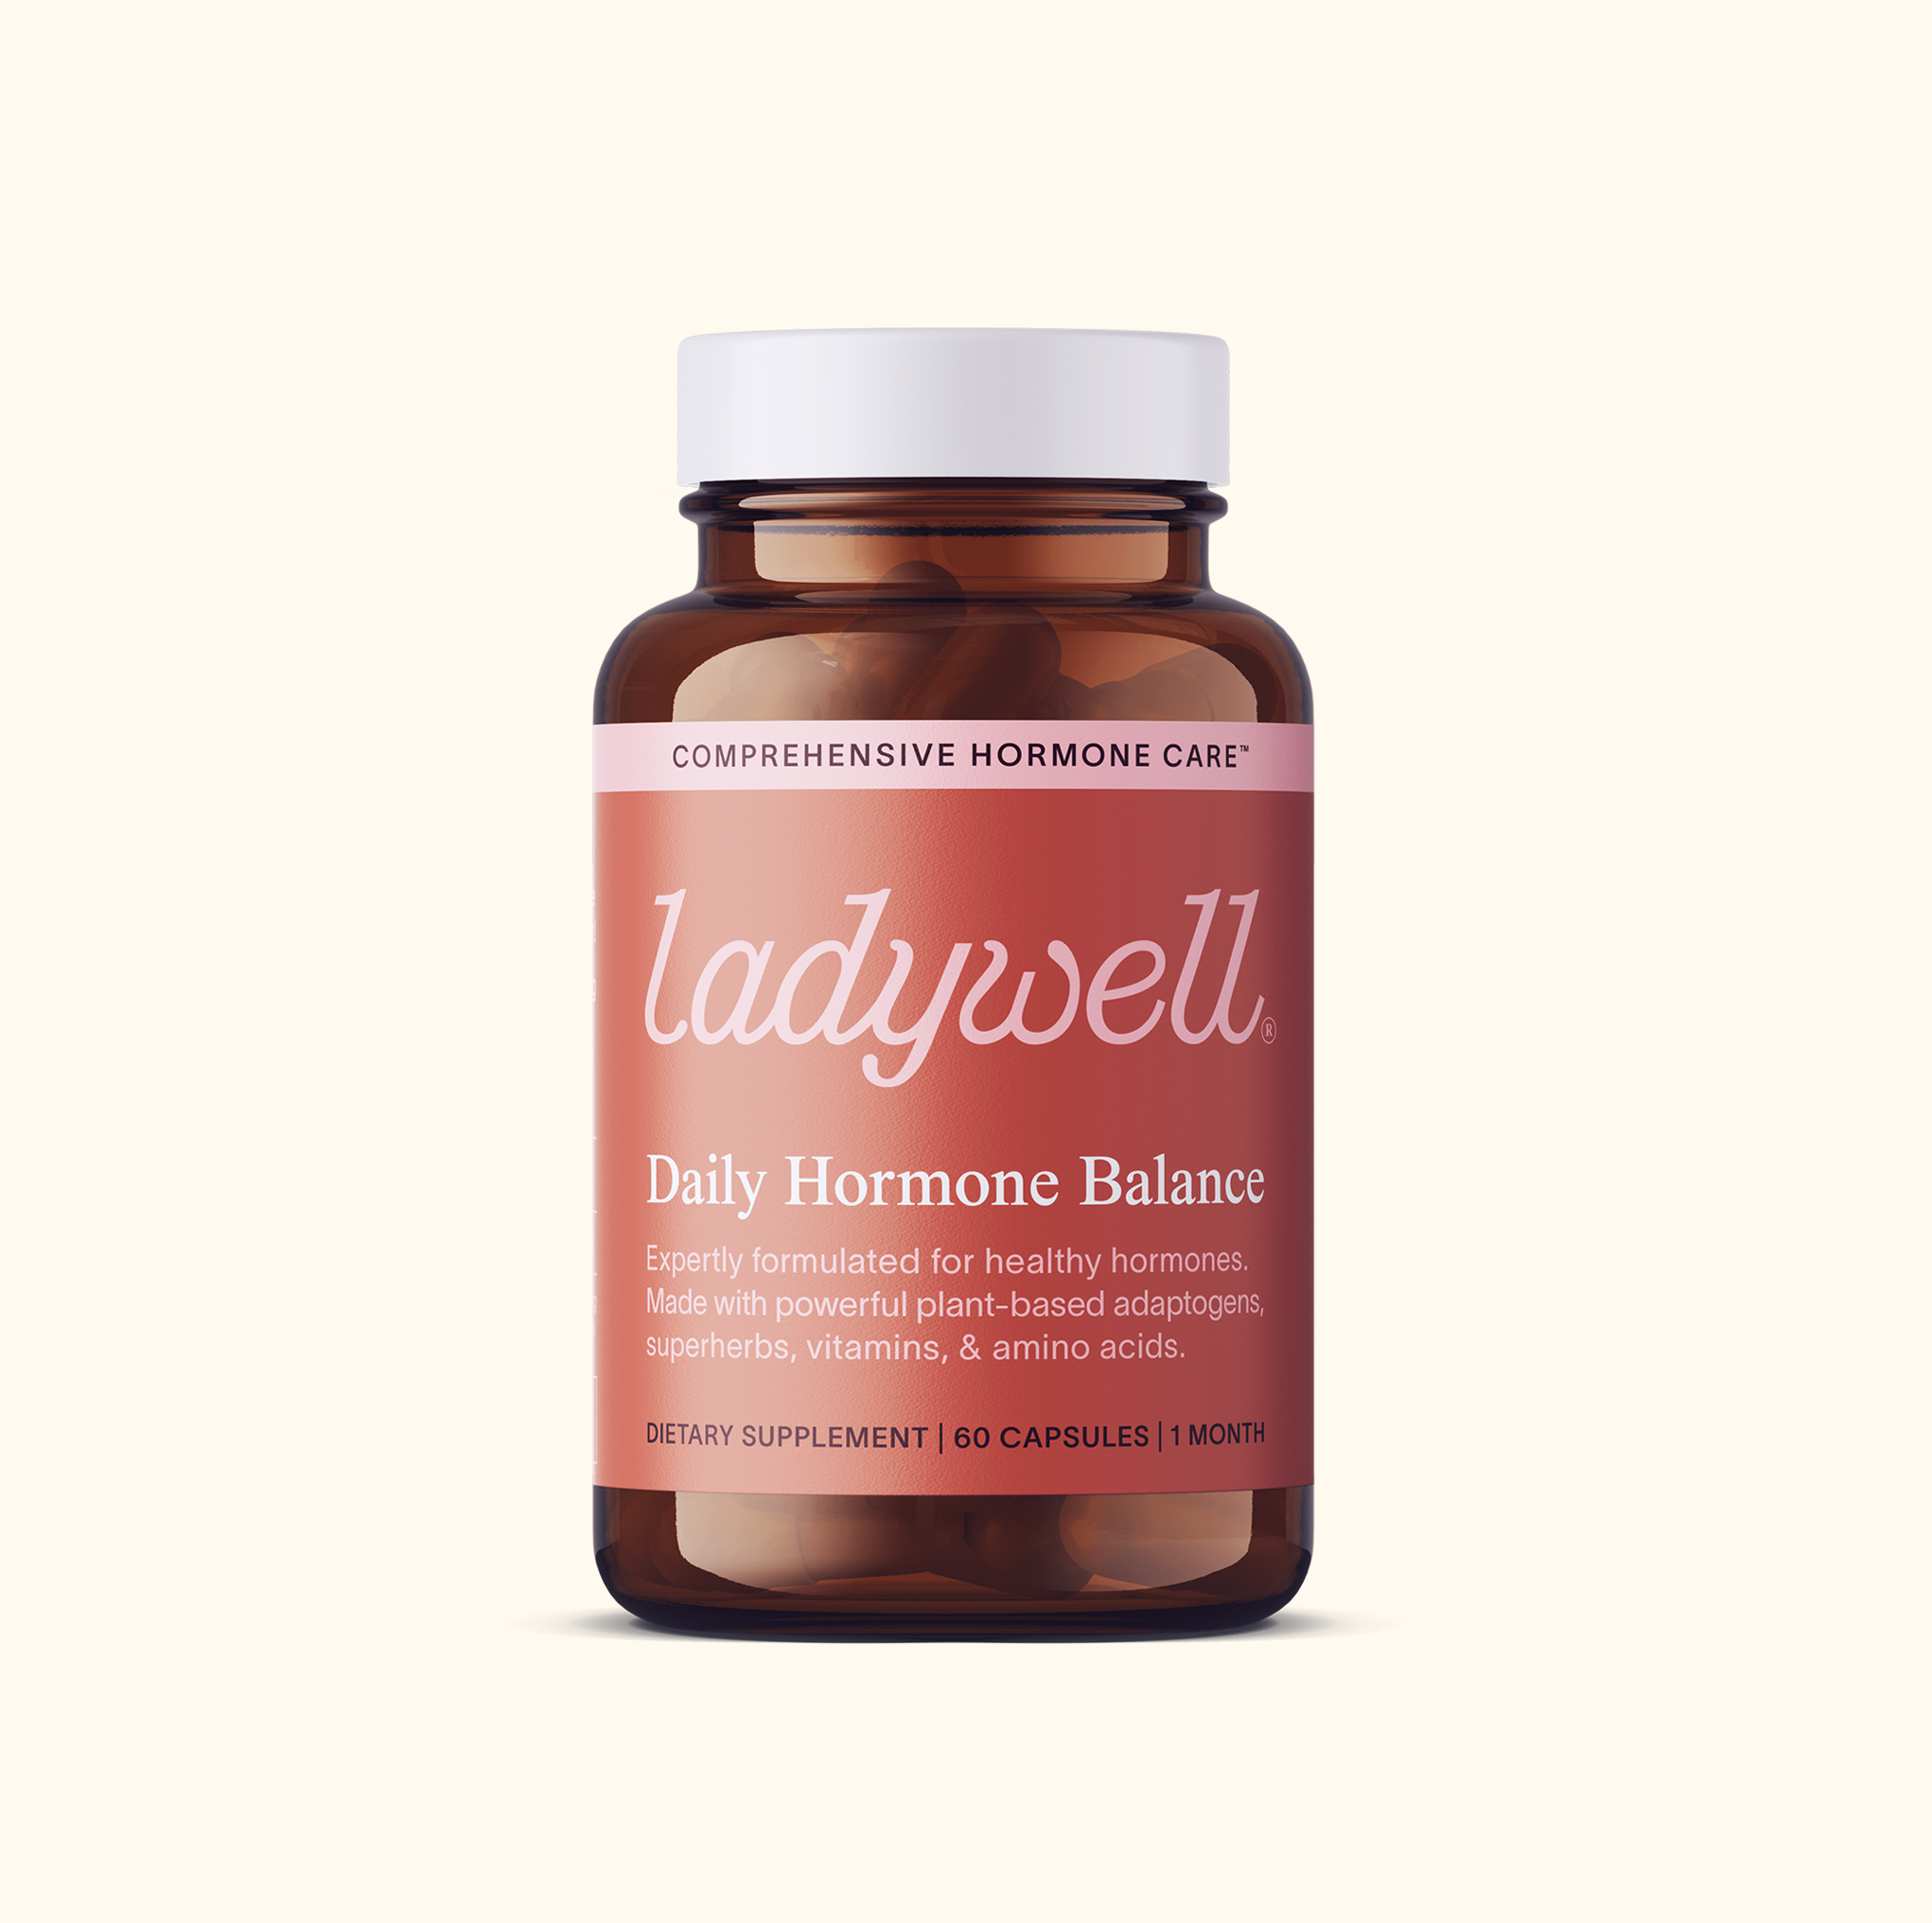 Ladywell Daily Hormone Balance Bundle